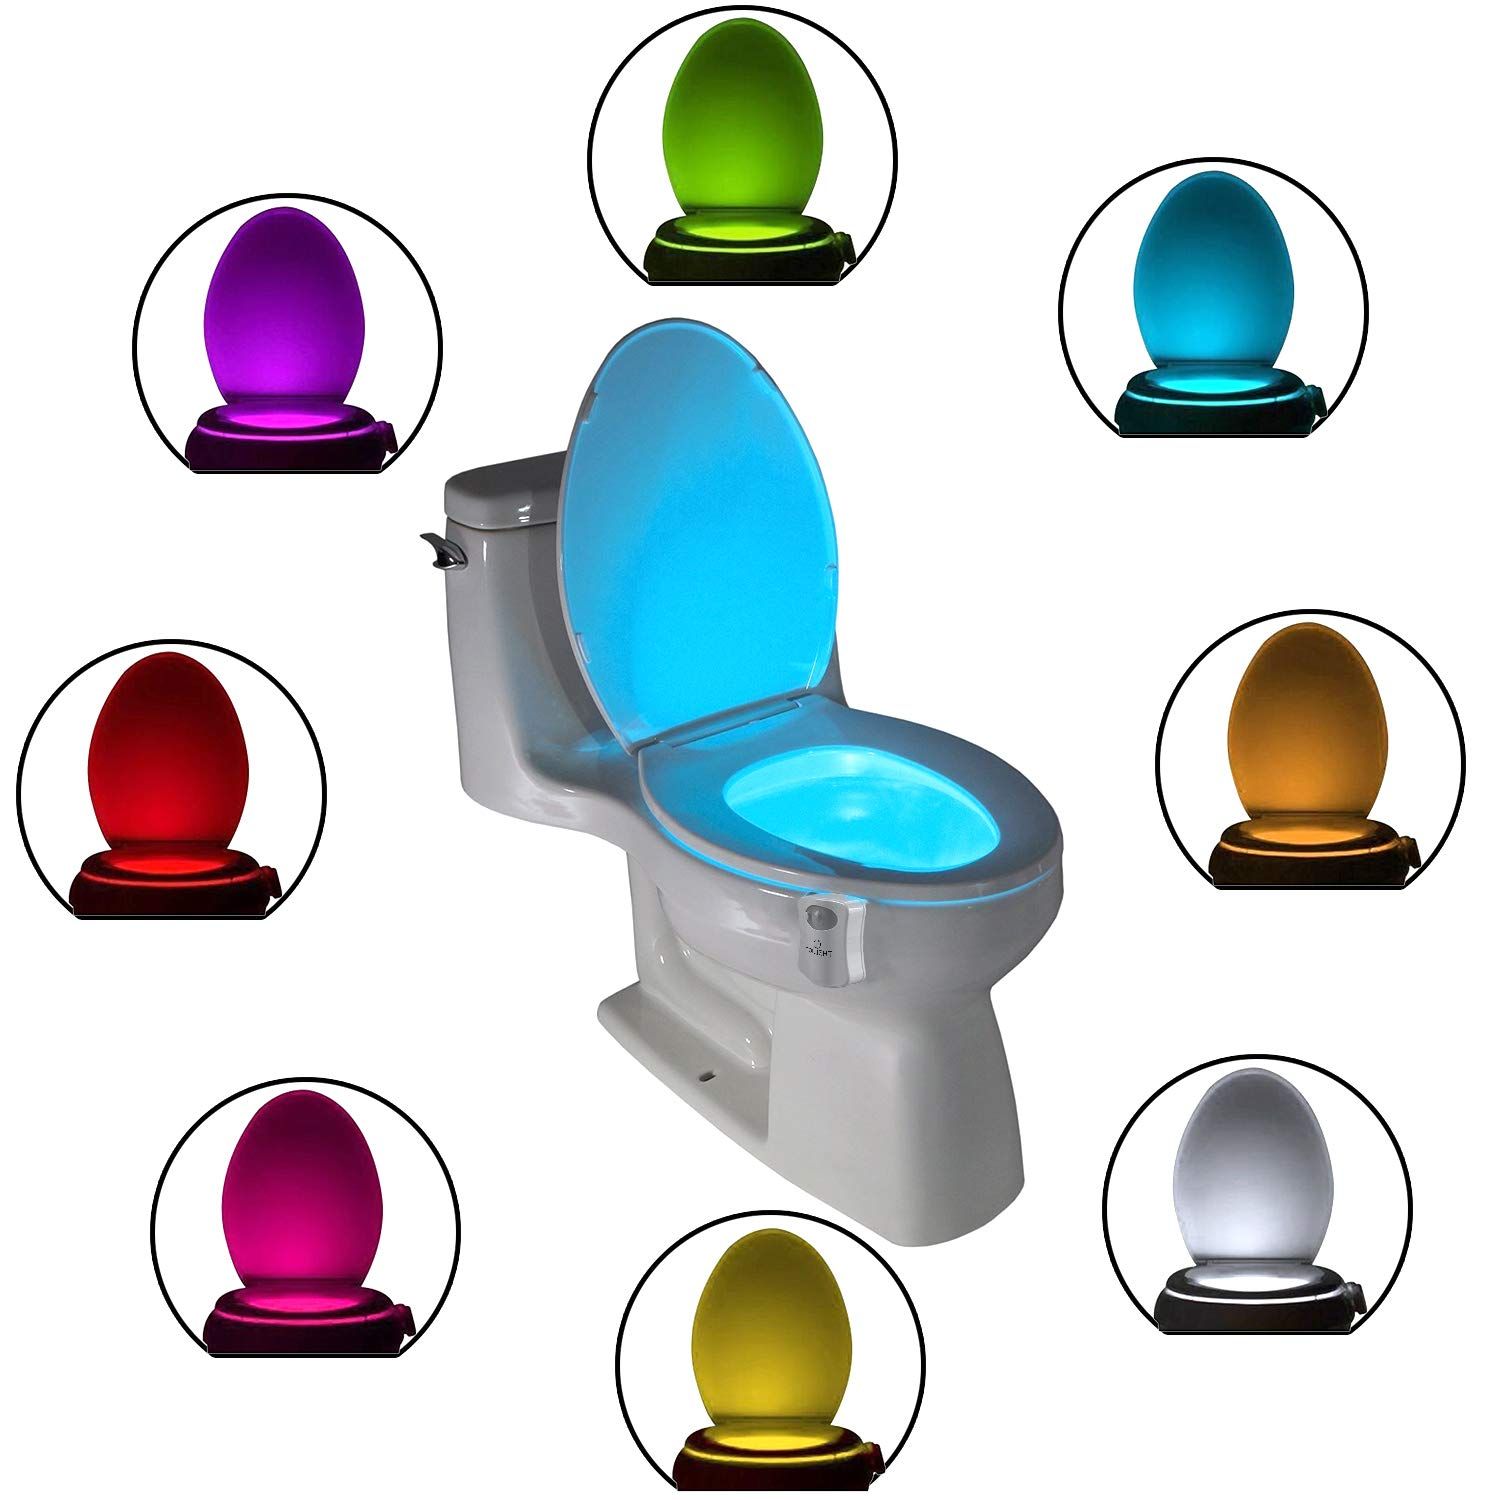 The Original Toilet Night Light Tech Gadget. Fun Bathroom Motion Sensor LED Lighting. Weird Novelty  | Amazon (US)